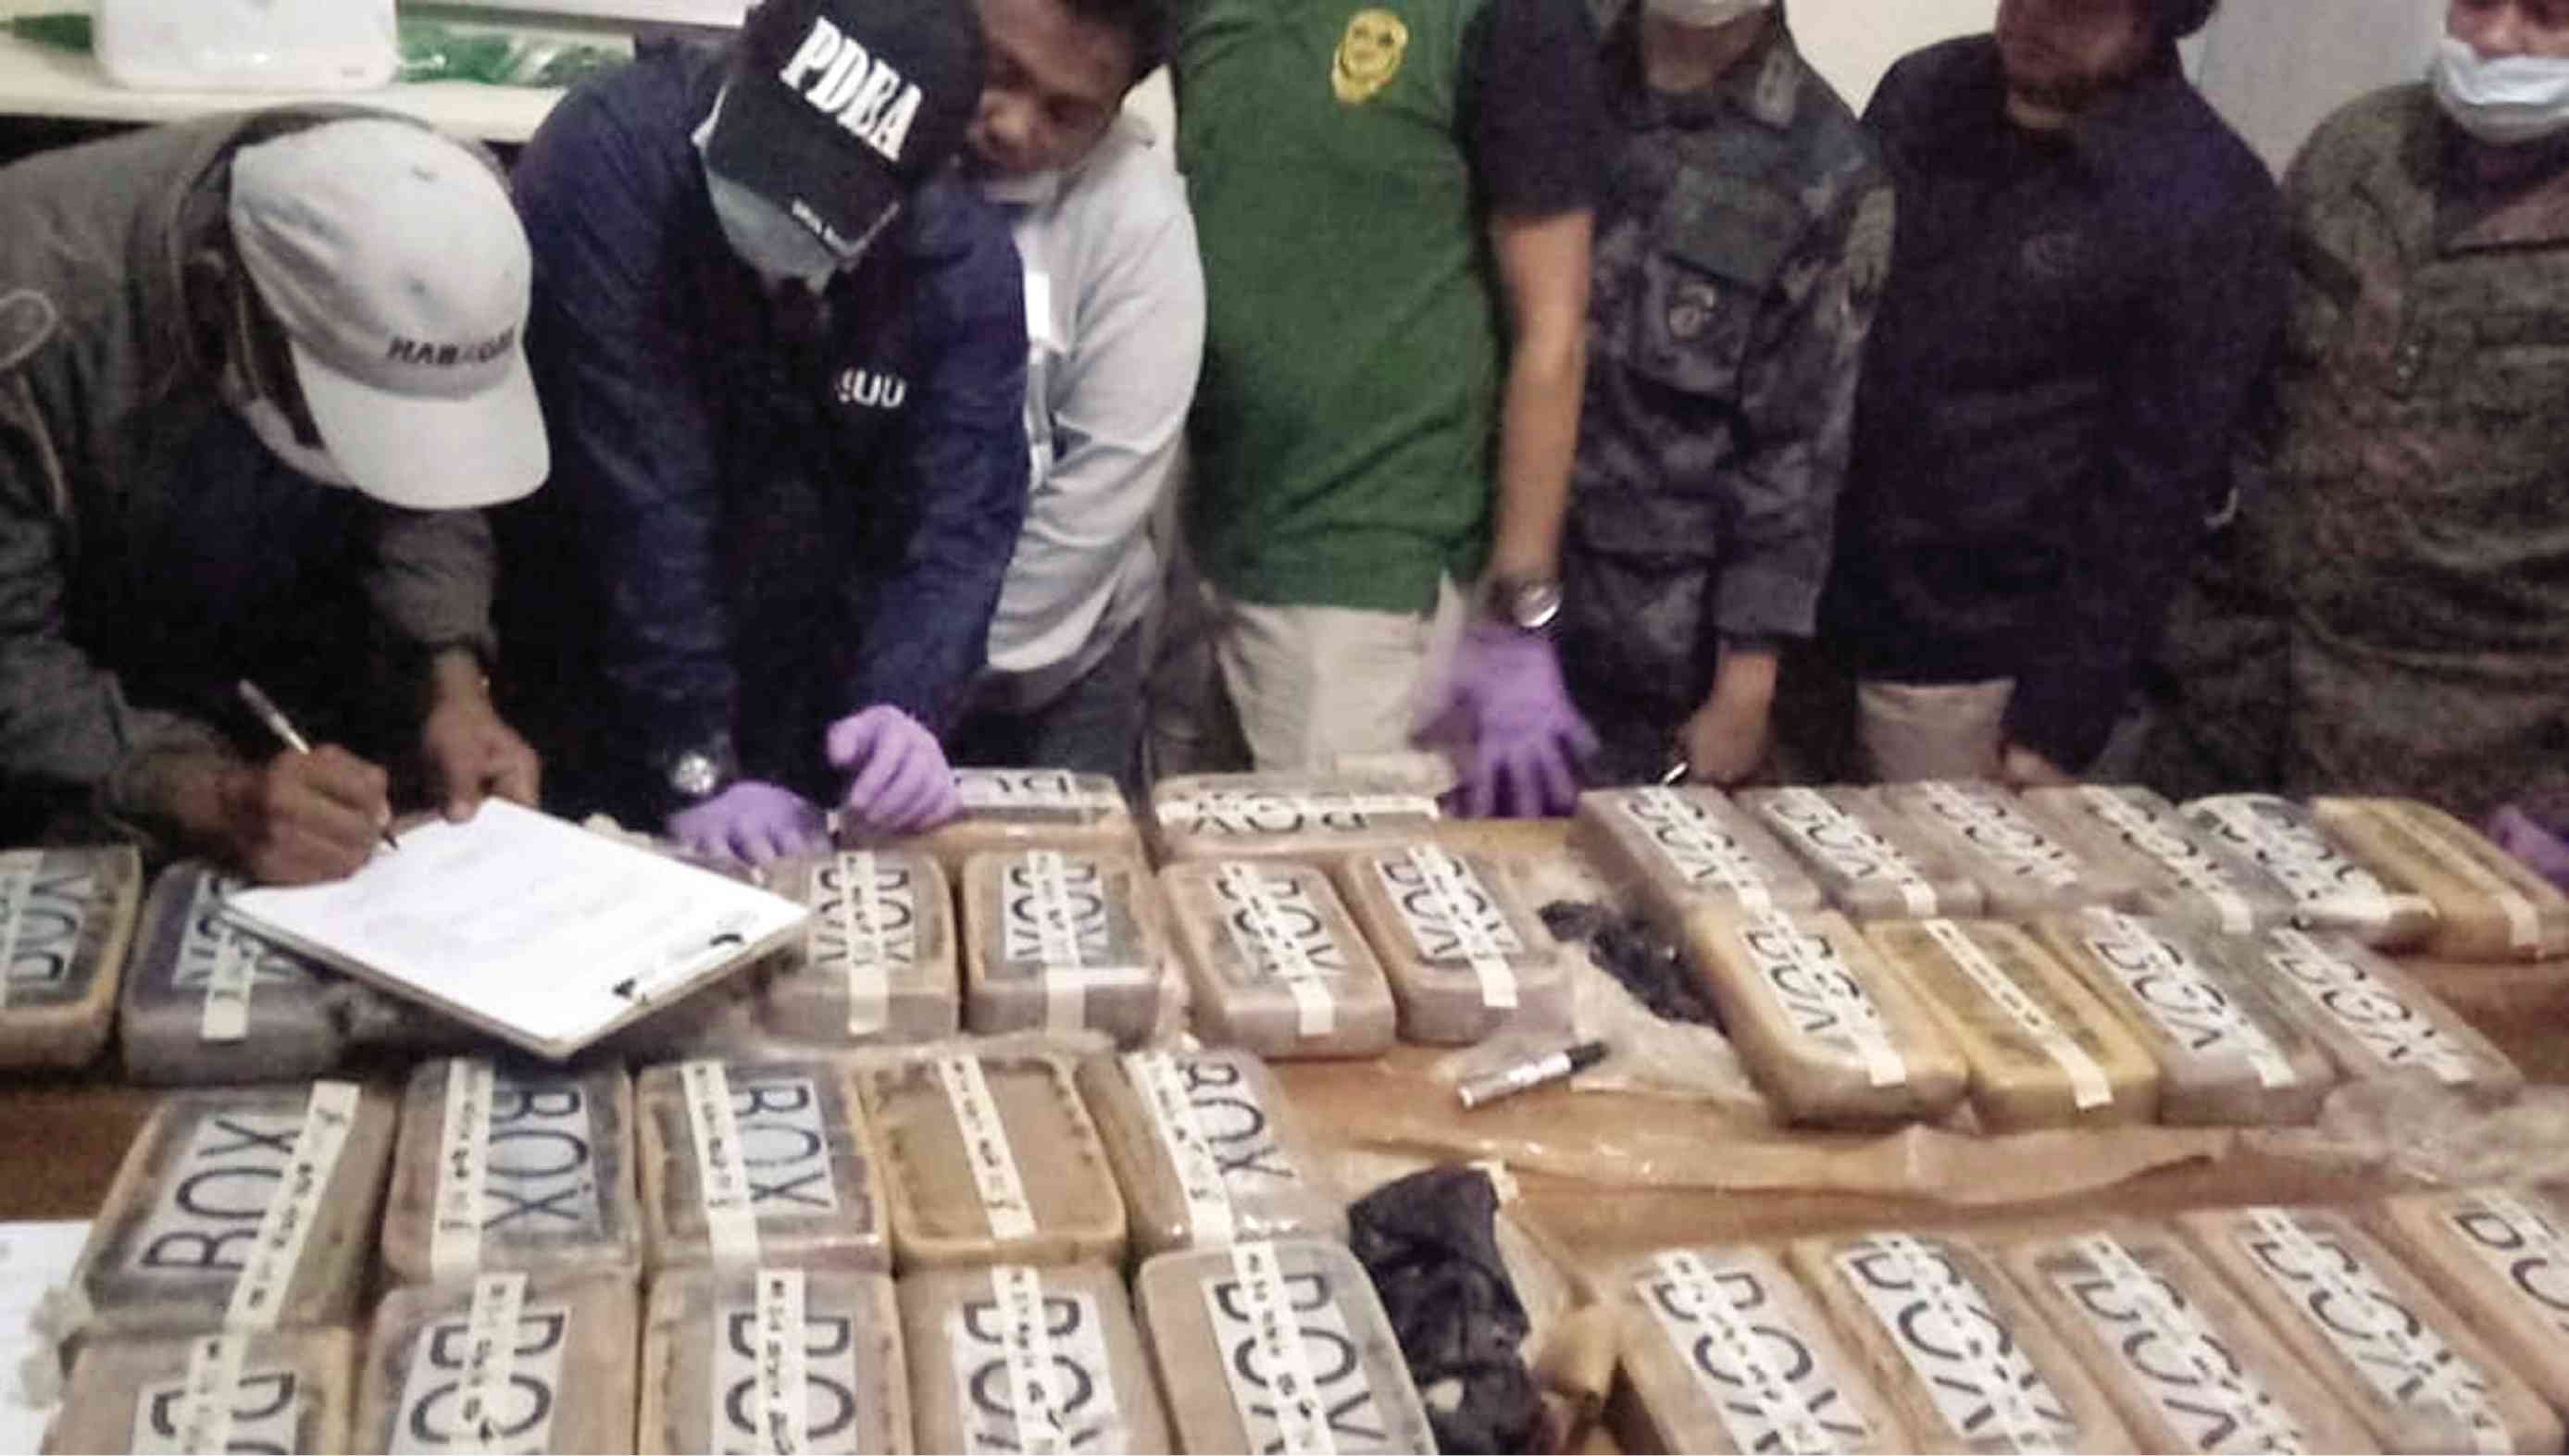 PNP says cocaine haul now P871M